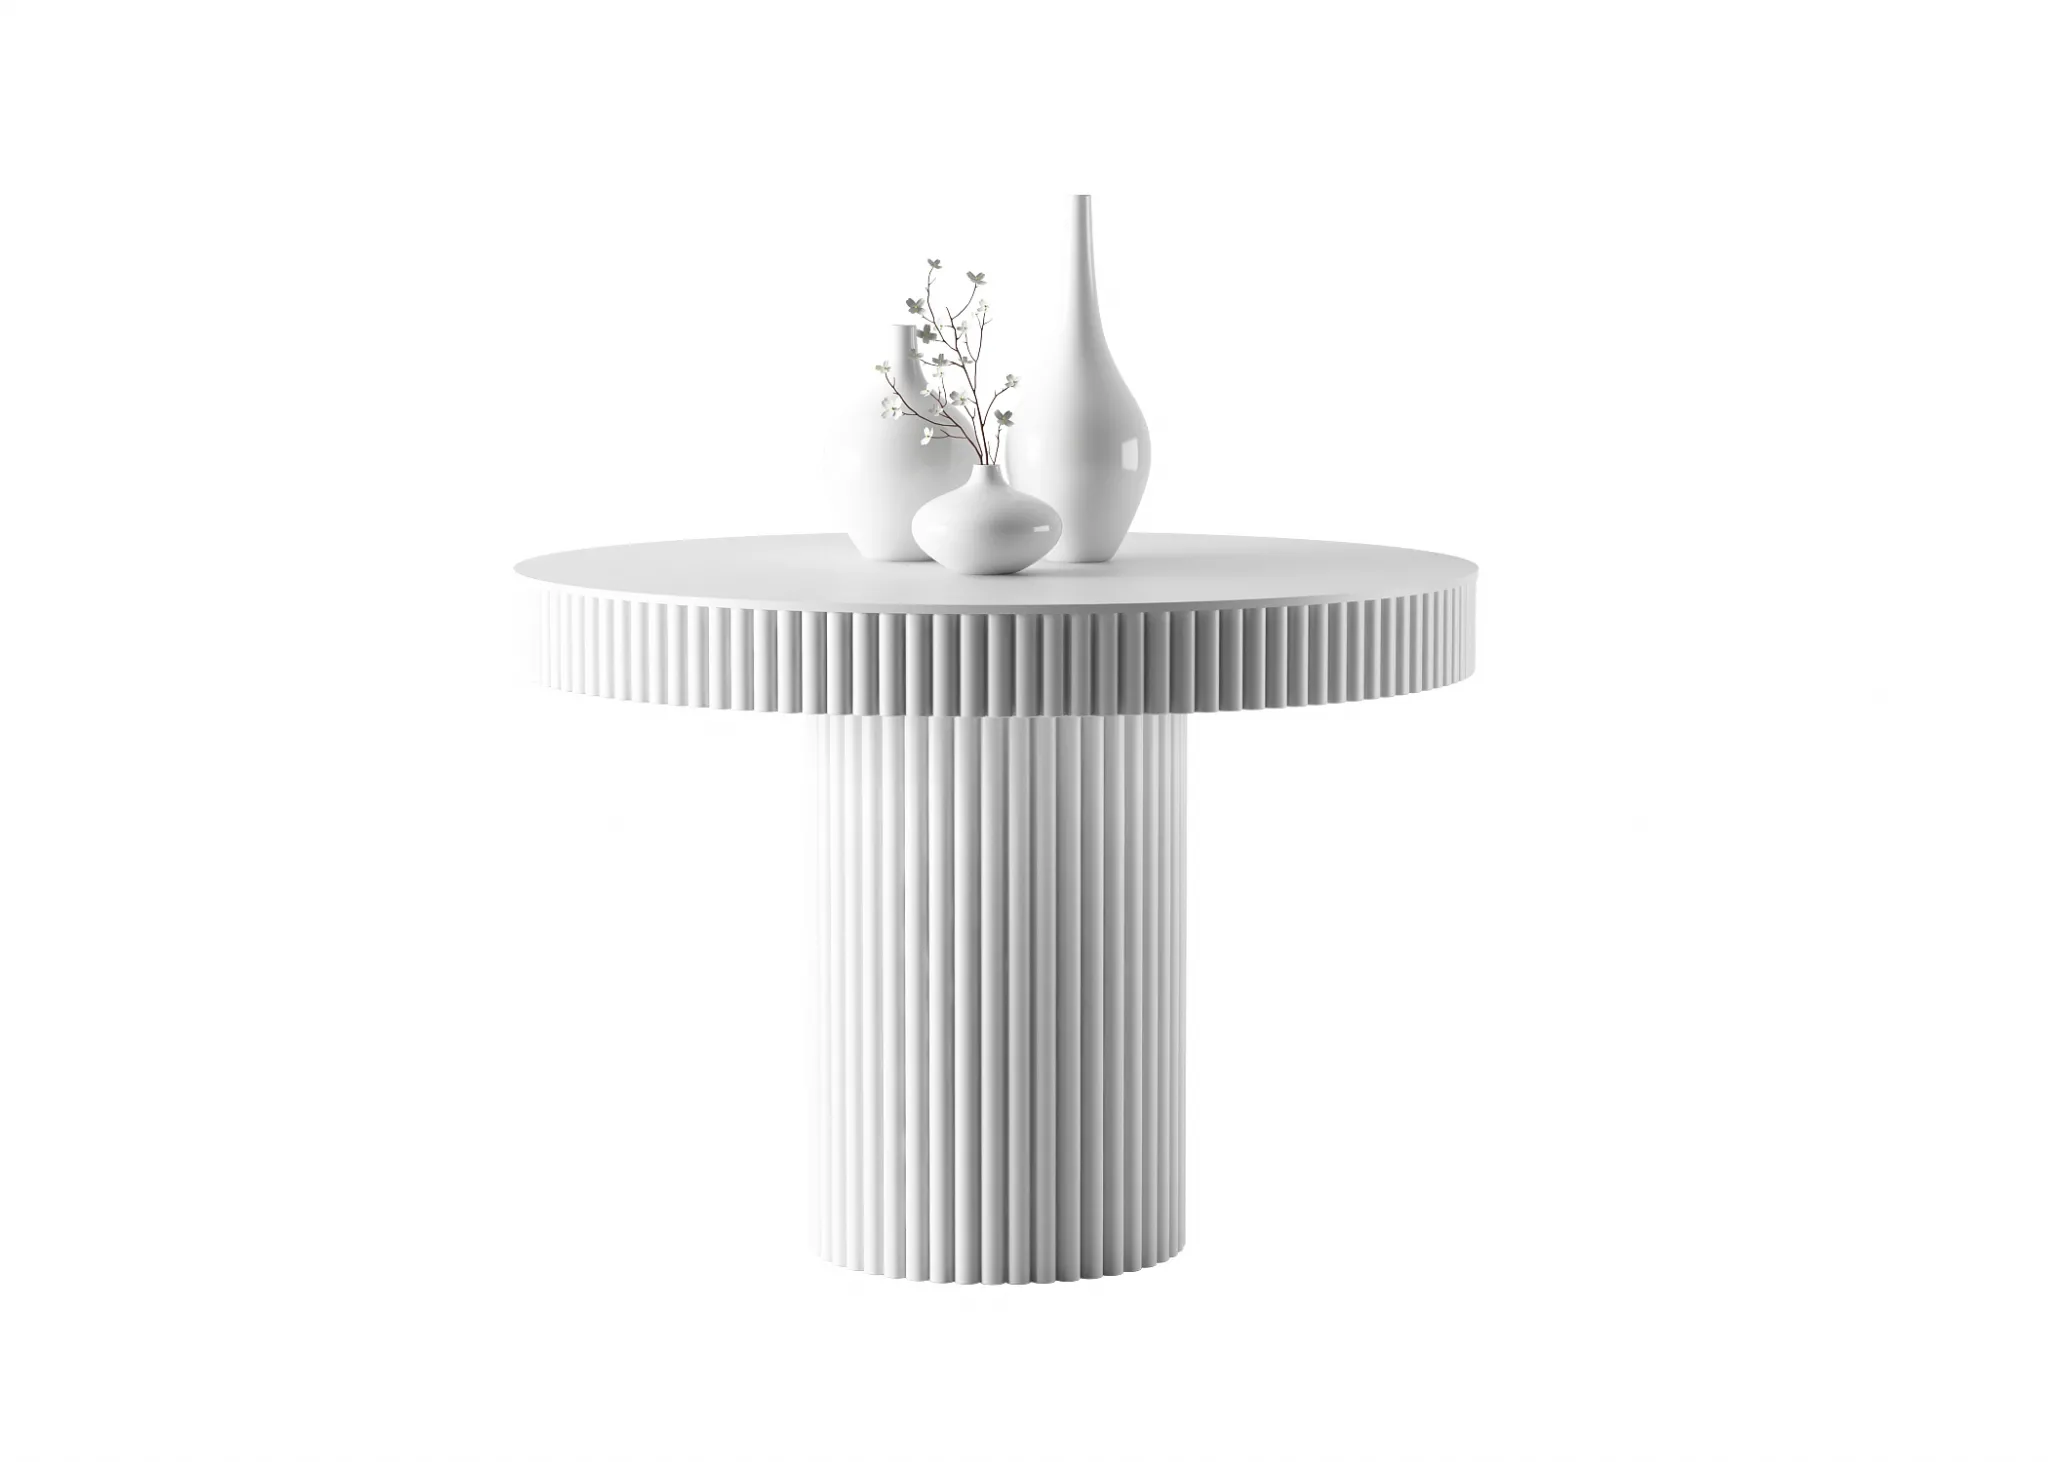 FURNITURE 3D MODELS – TABLES – 0212